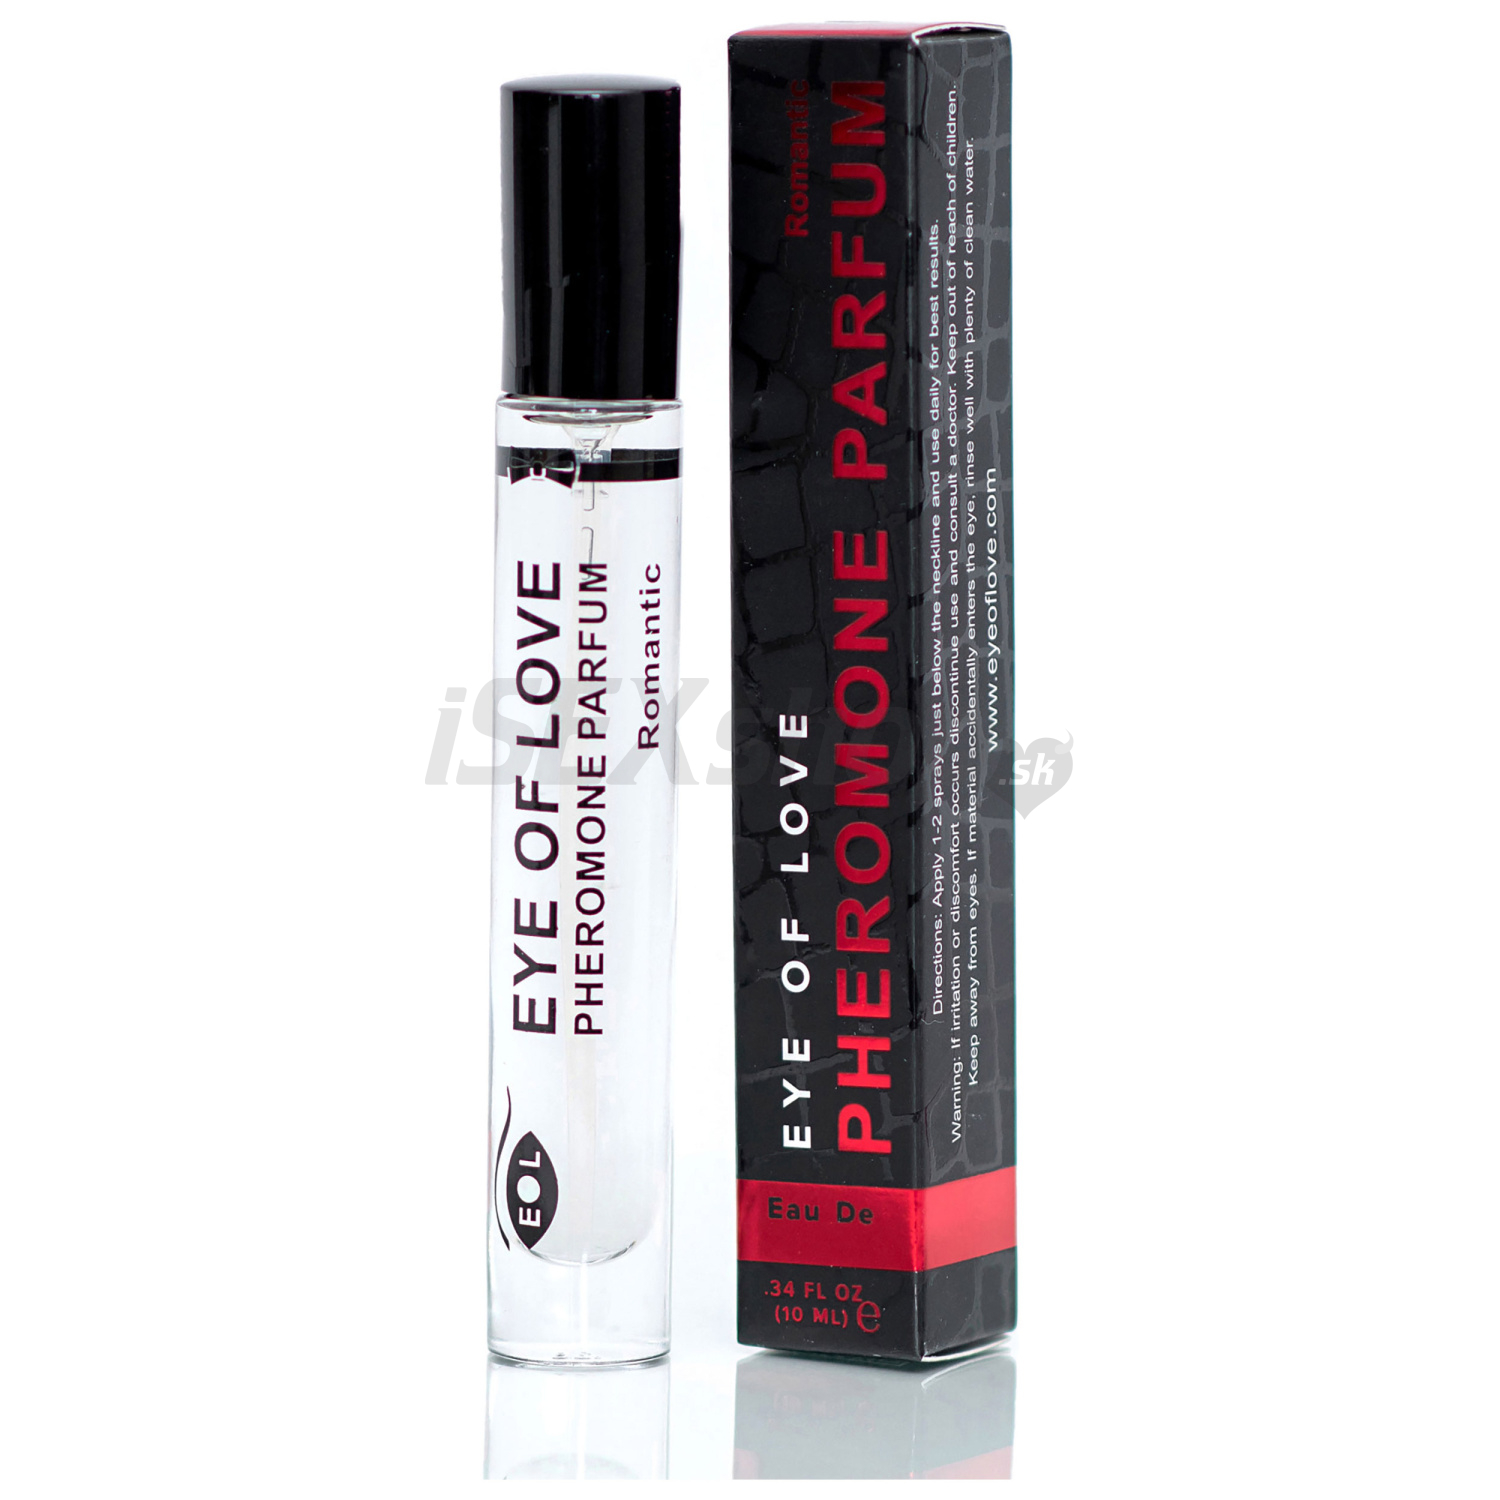 E-shop Eye of Love Pheromone Parfum for Men Romantic Travel Size 10 ml